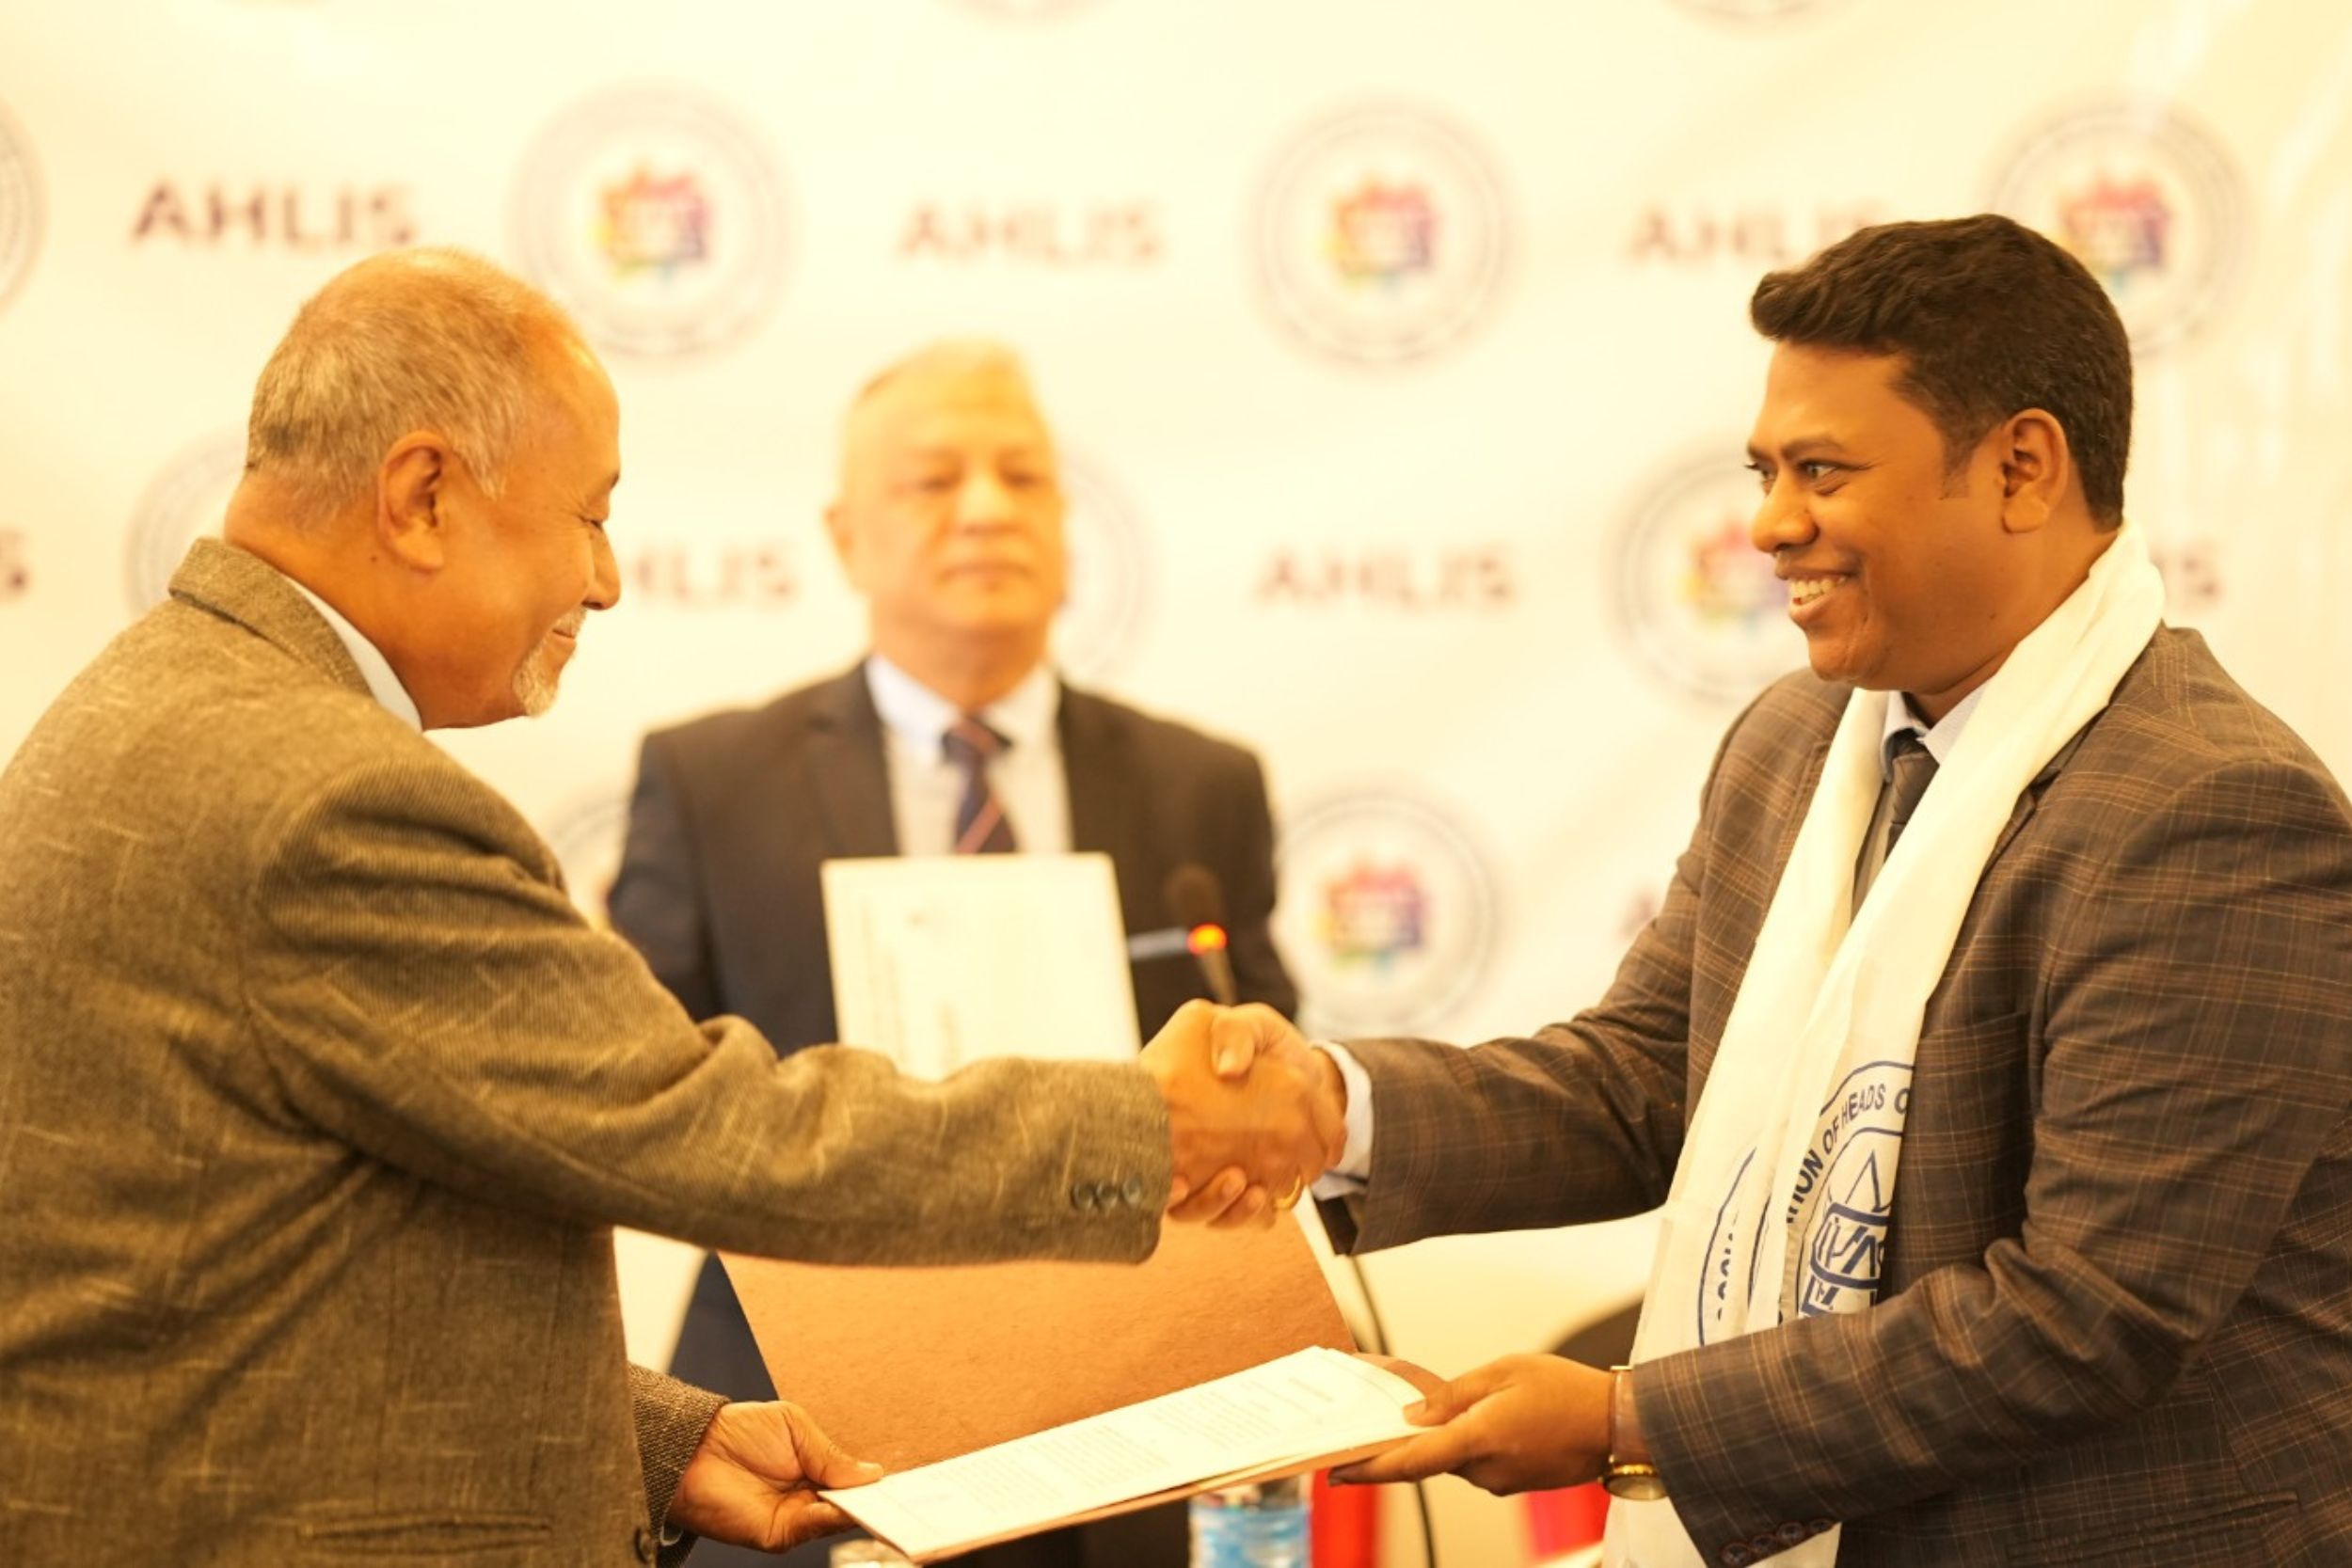 ADAMAS University as Co-operative Sponsors of AHLIS